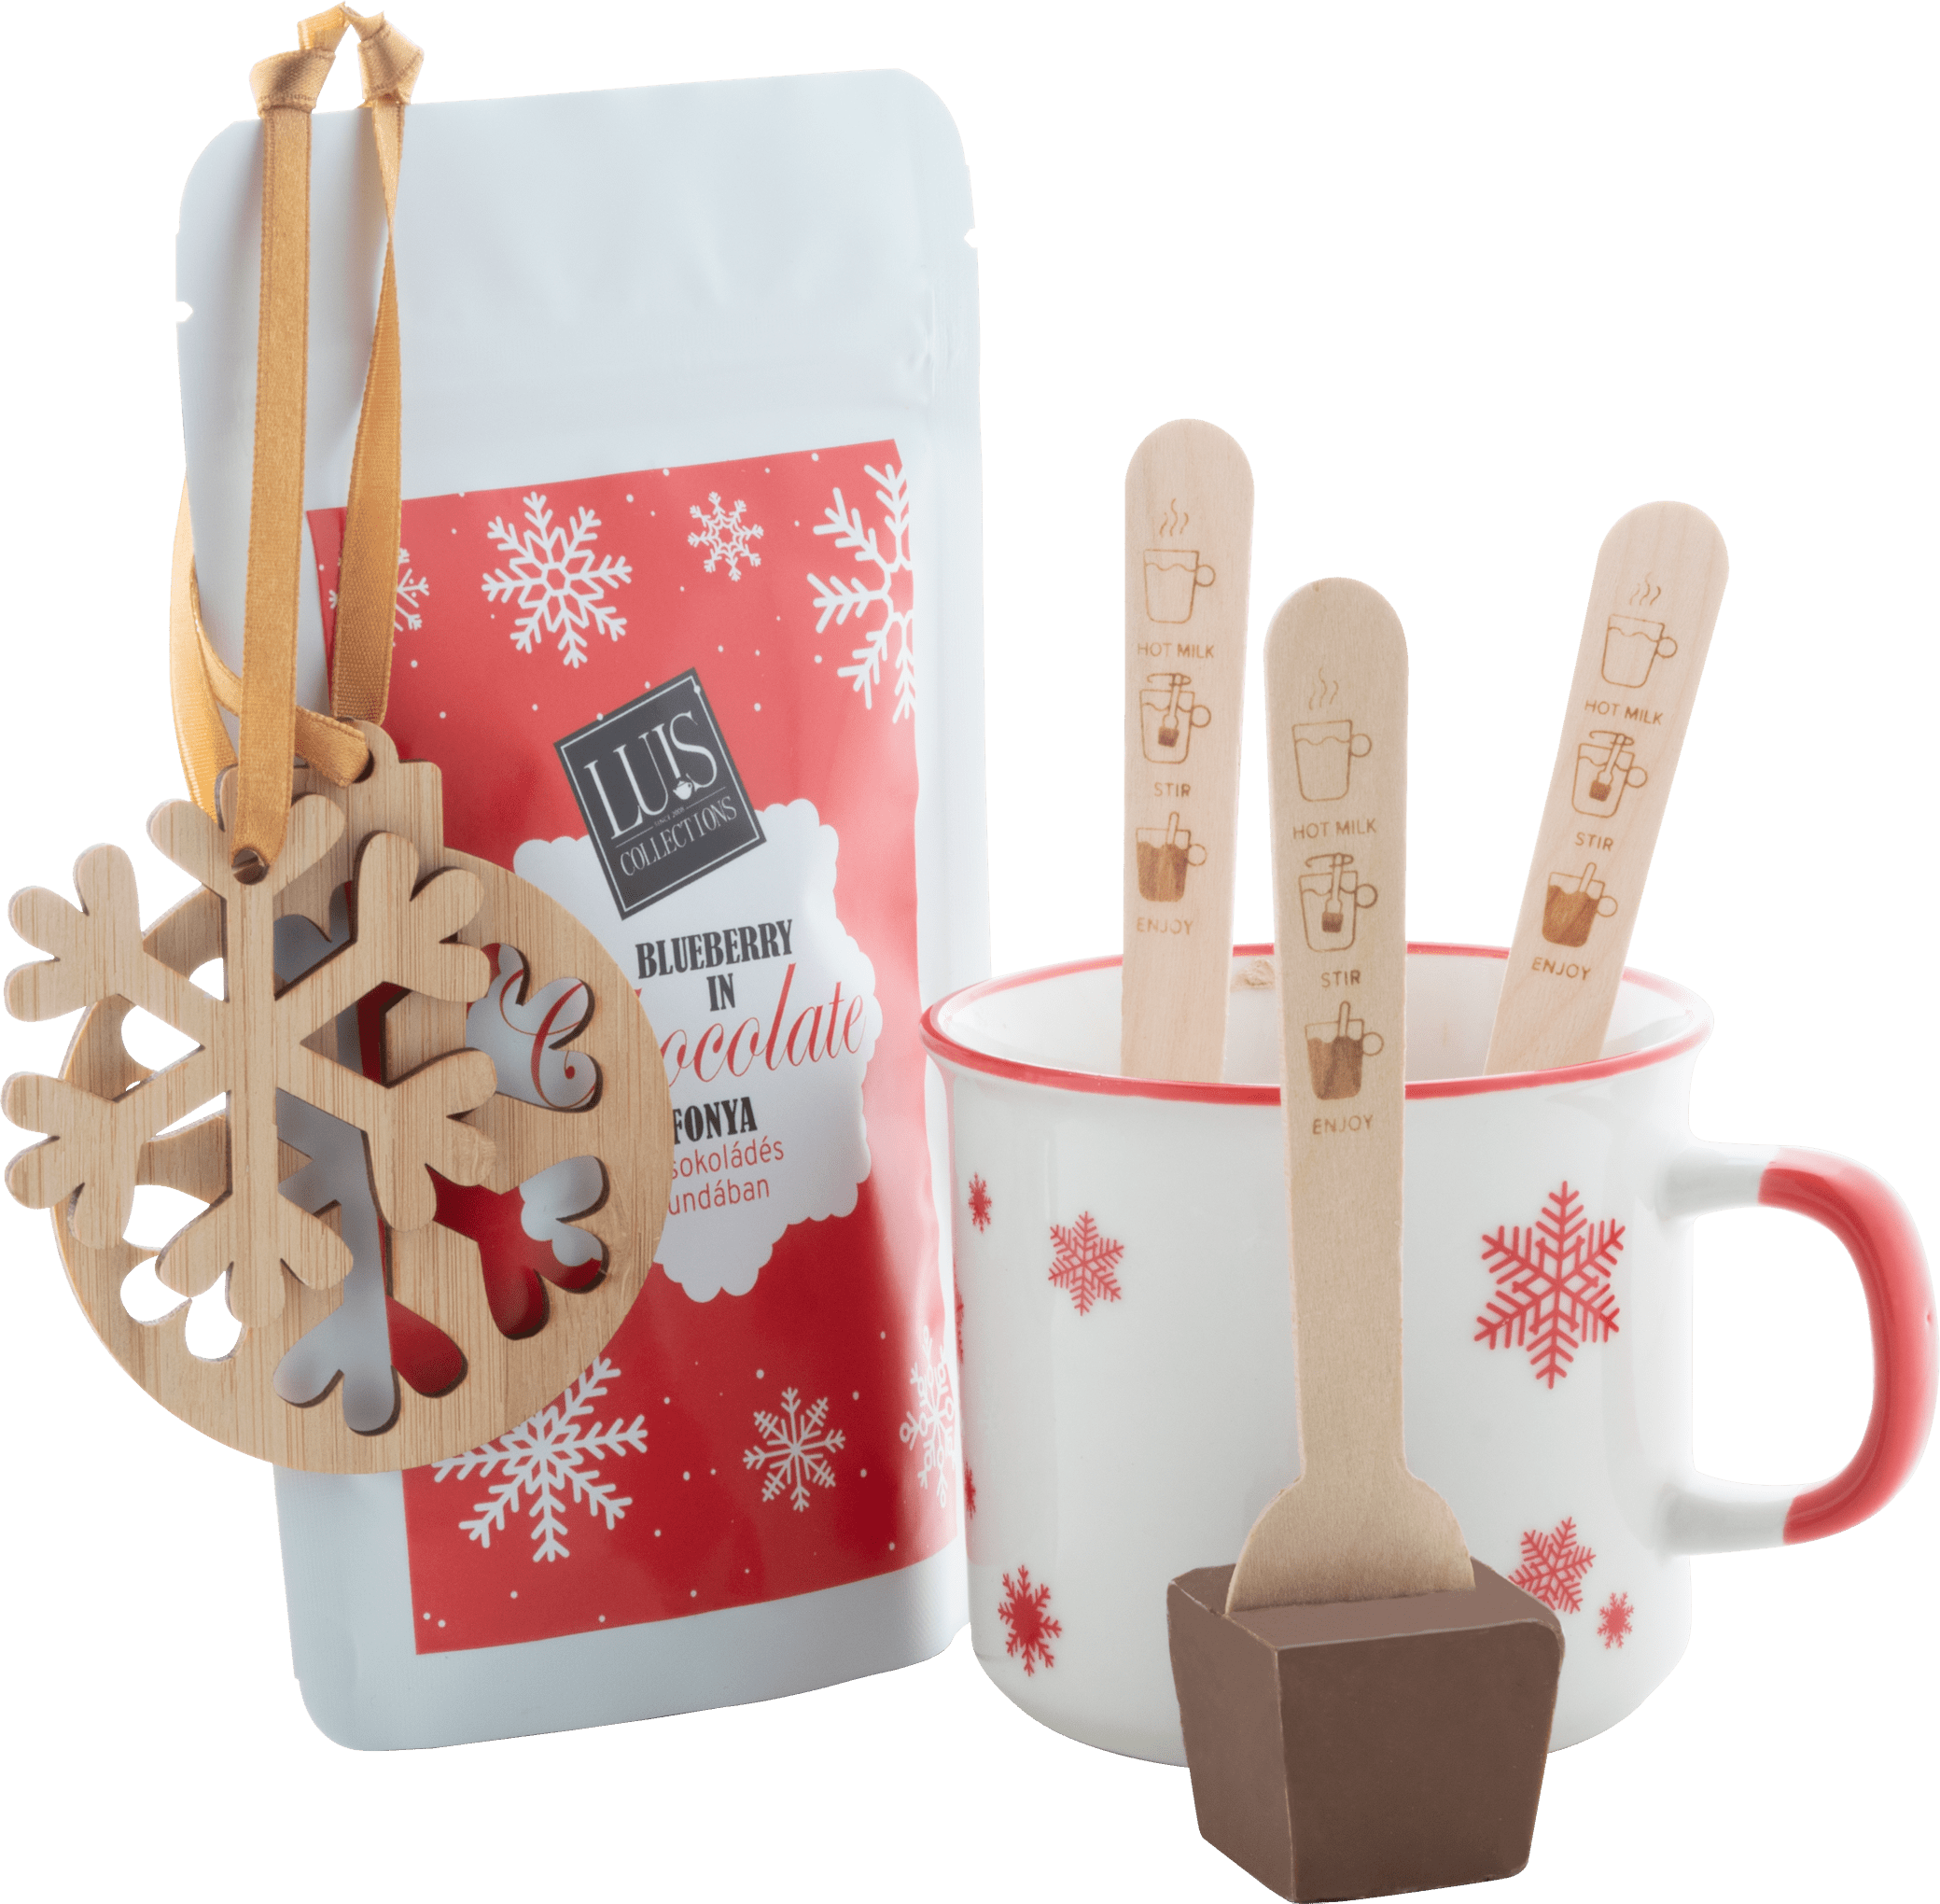 Coffret cadeau Noël avec tasse, cuillère à chocolat chaud